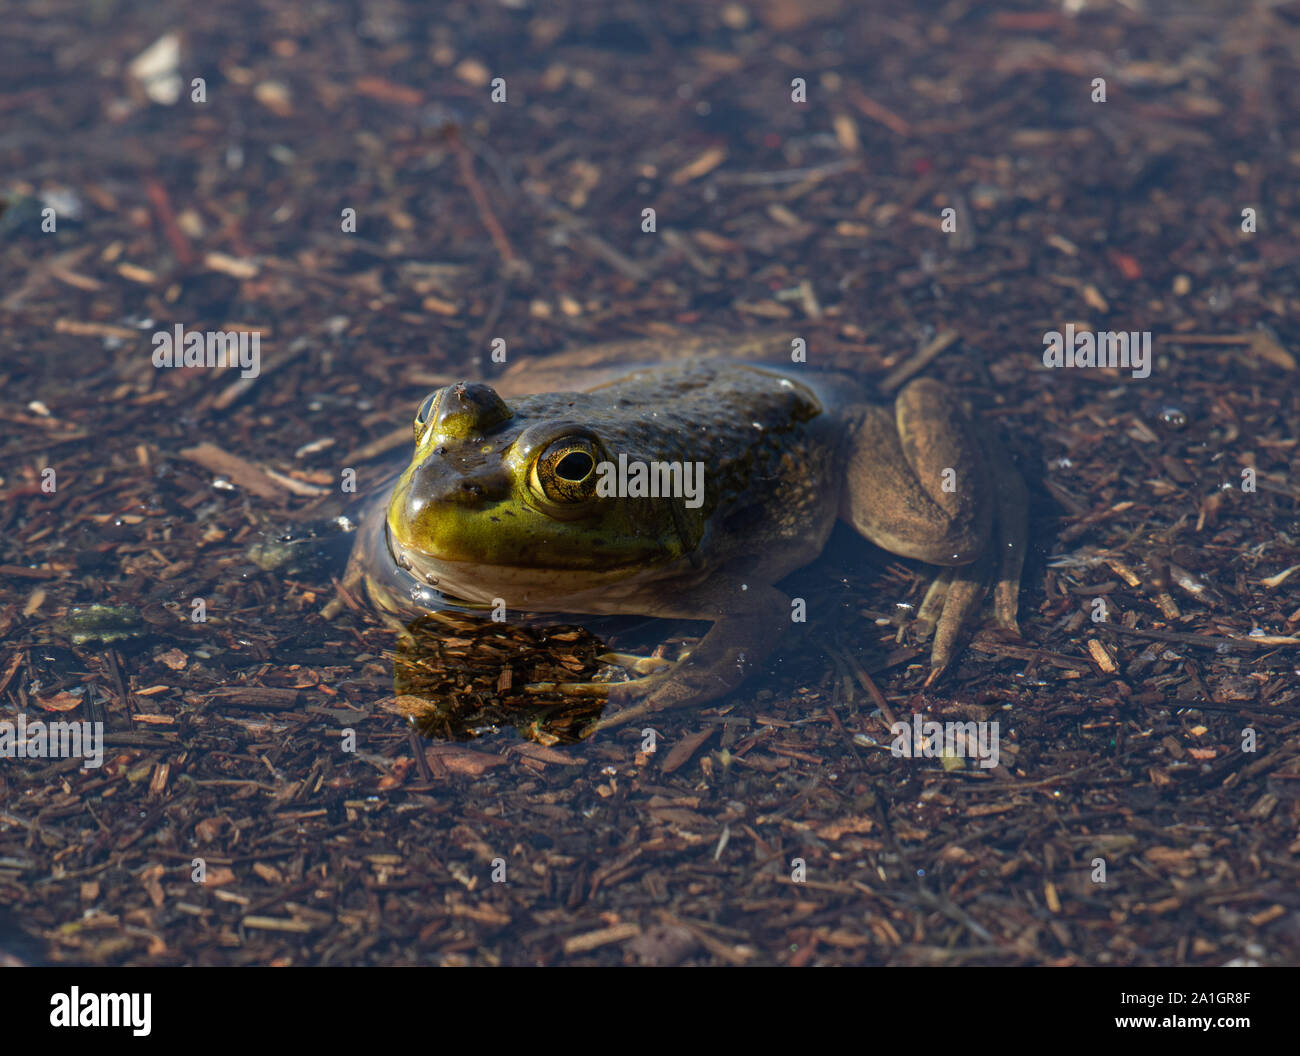 American Bullfrog or Lithobates catesbeianus Stock Photo